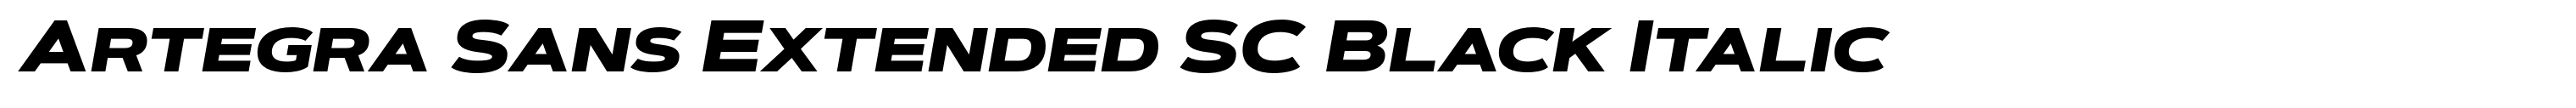 Artegra Sans Extended SC Black Italic